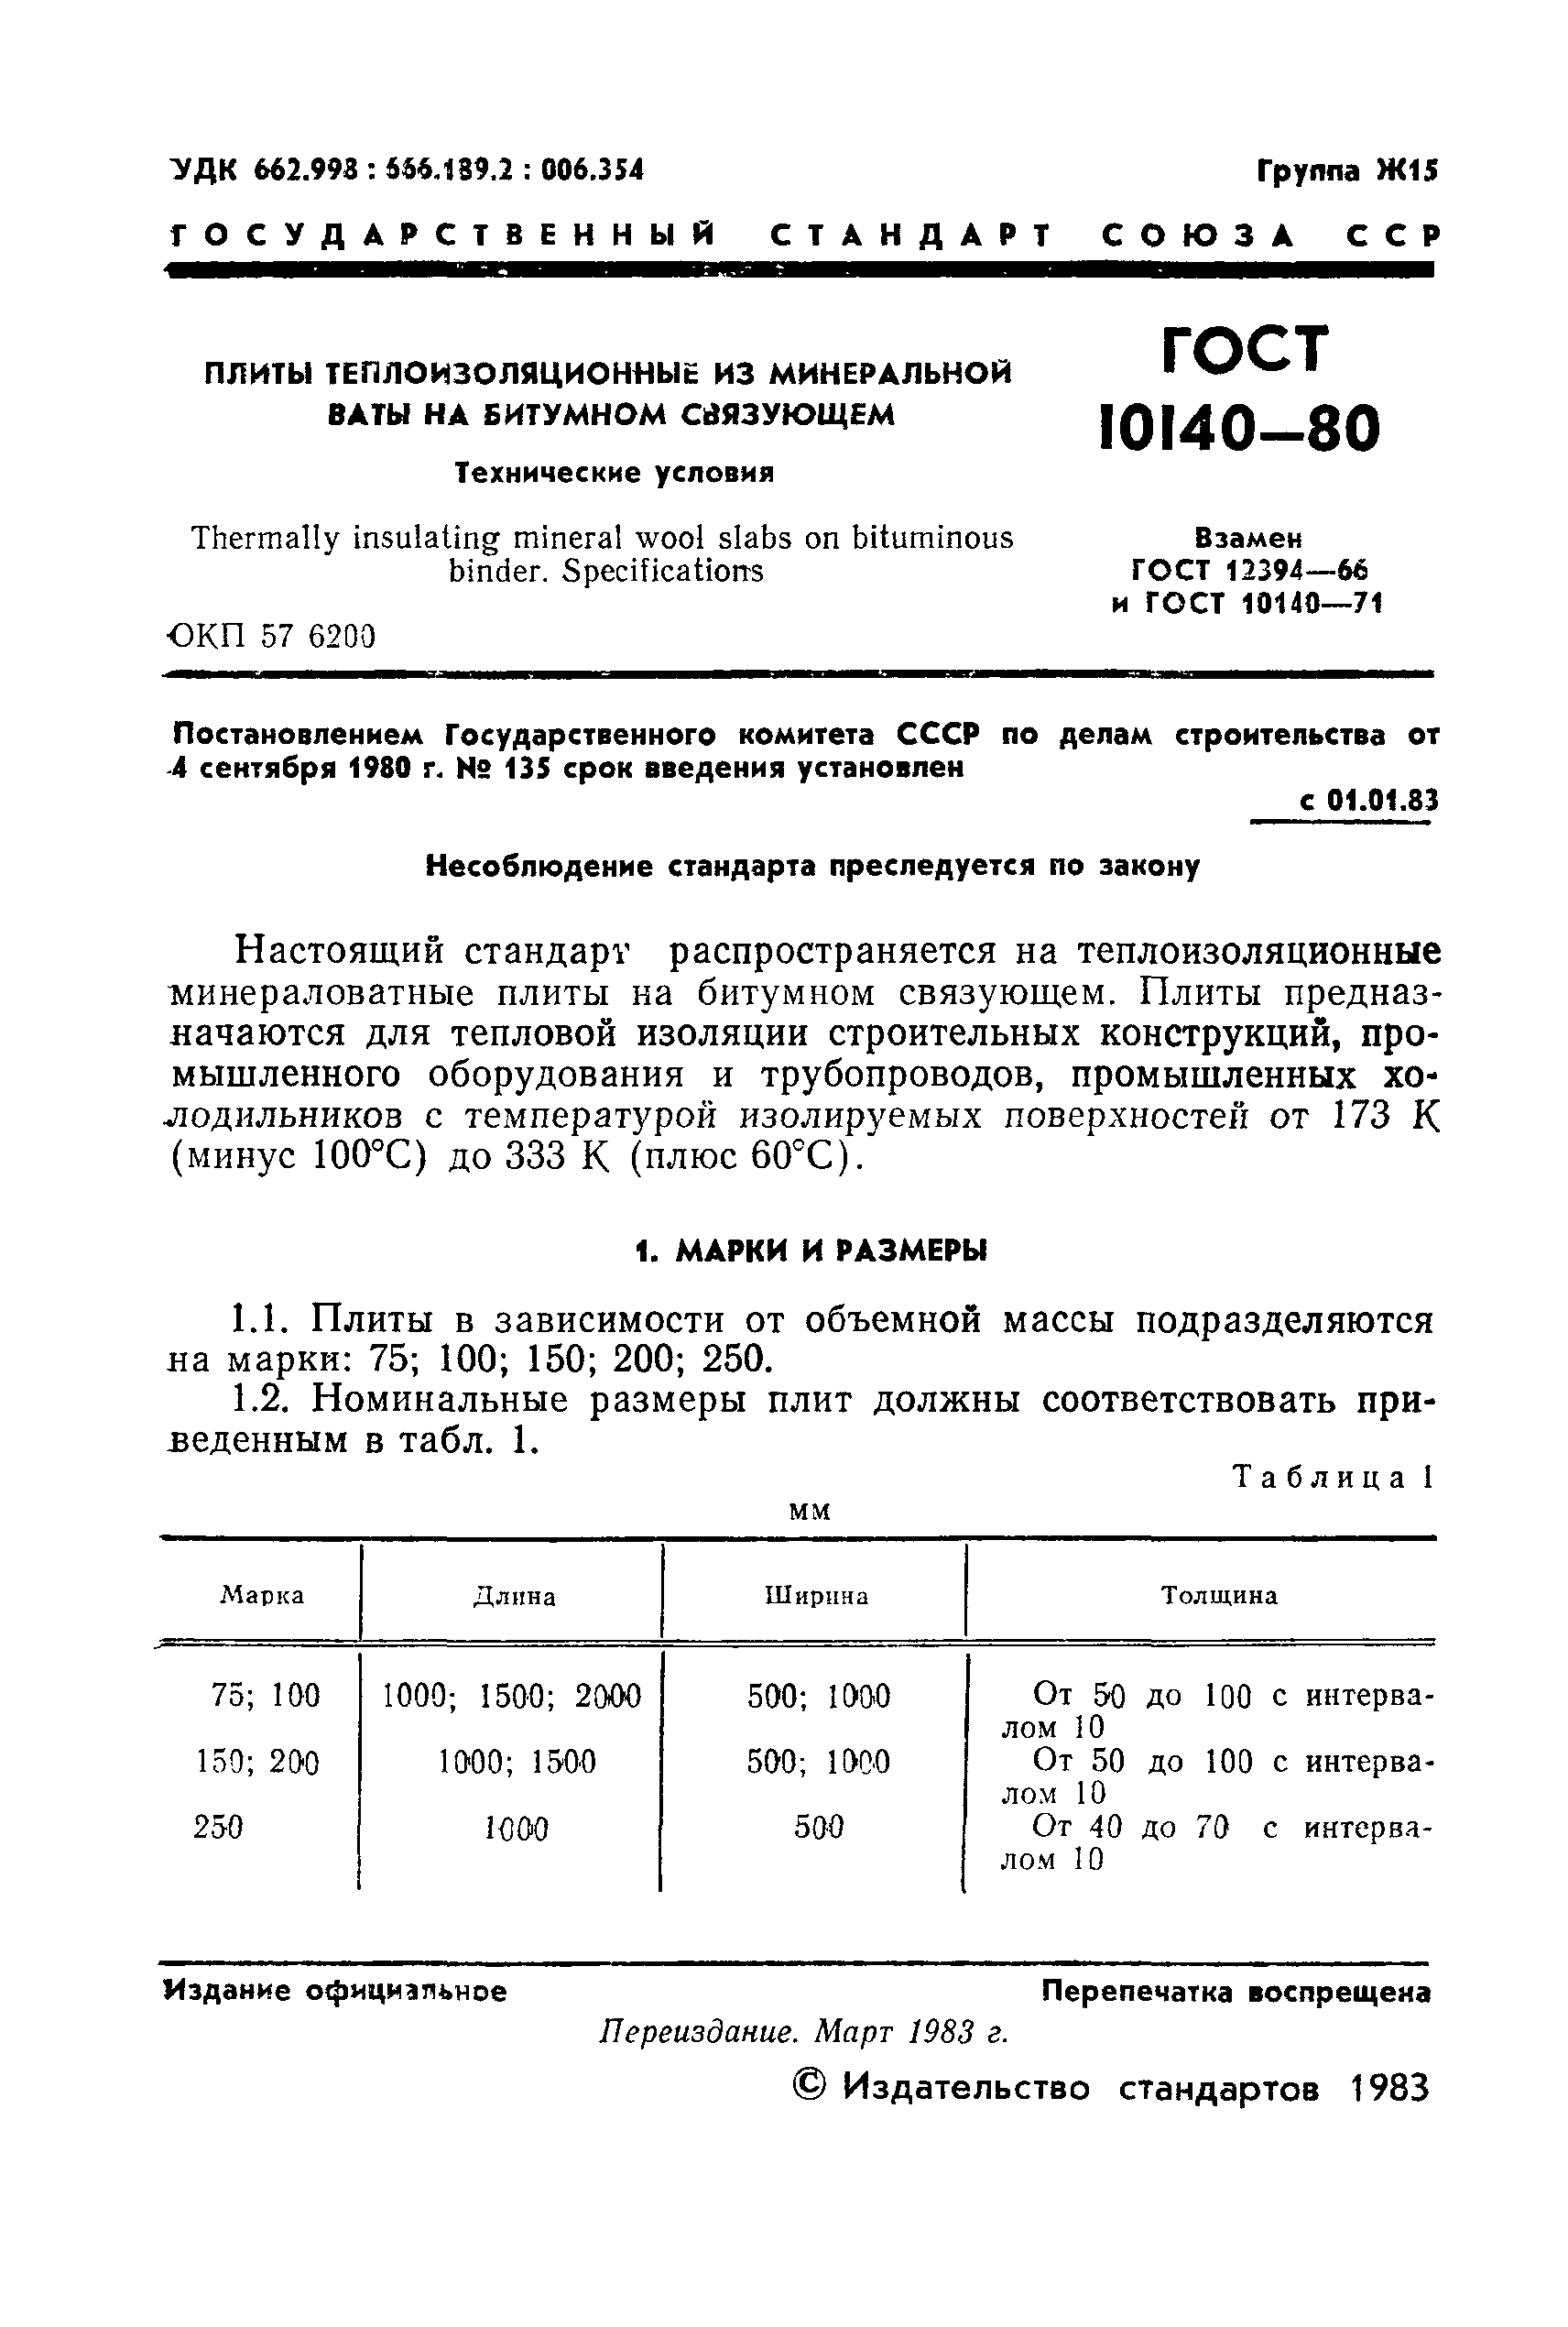 ГОСТ 10140-80